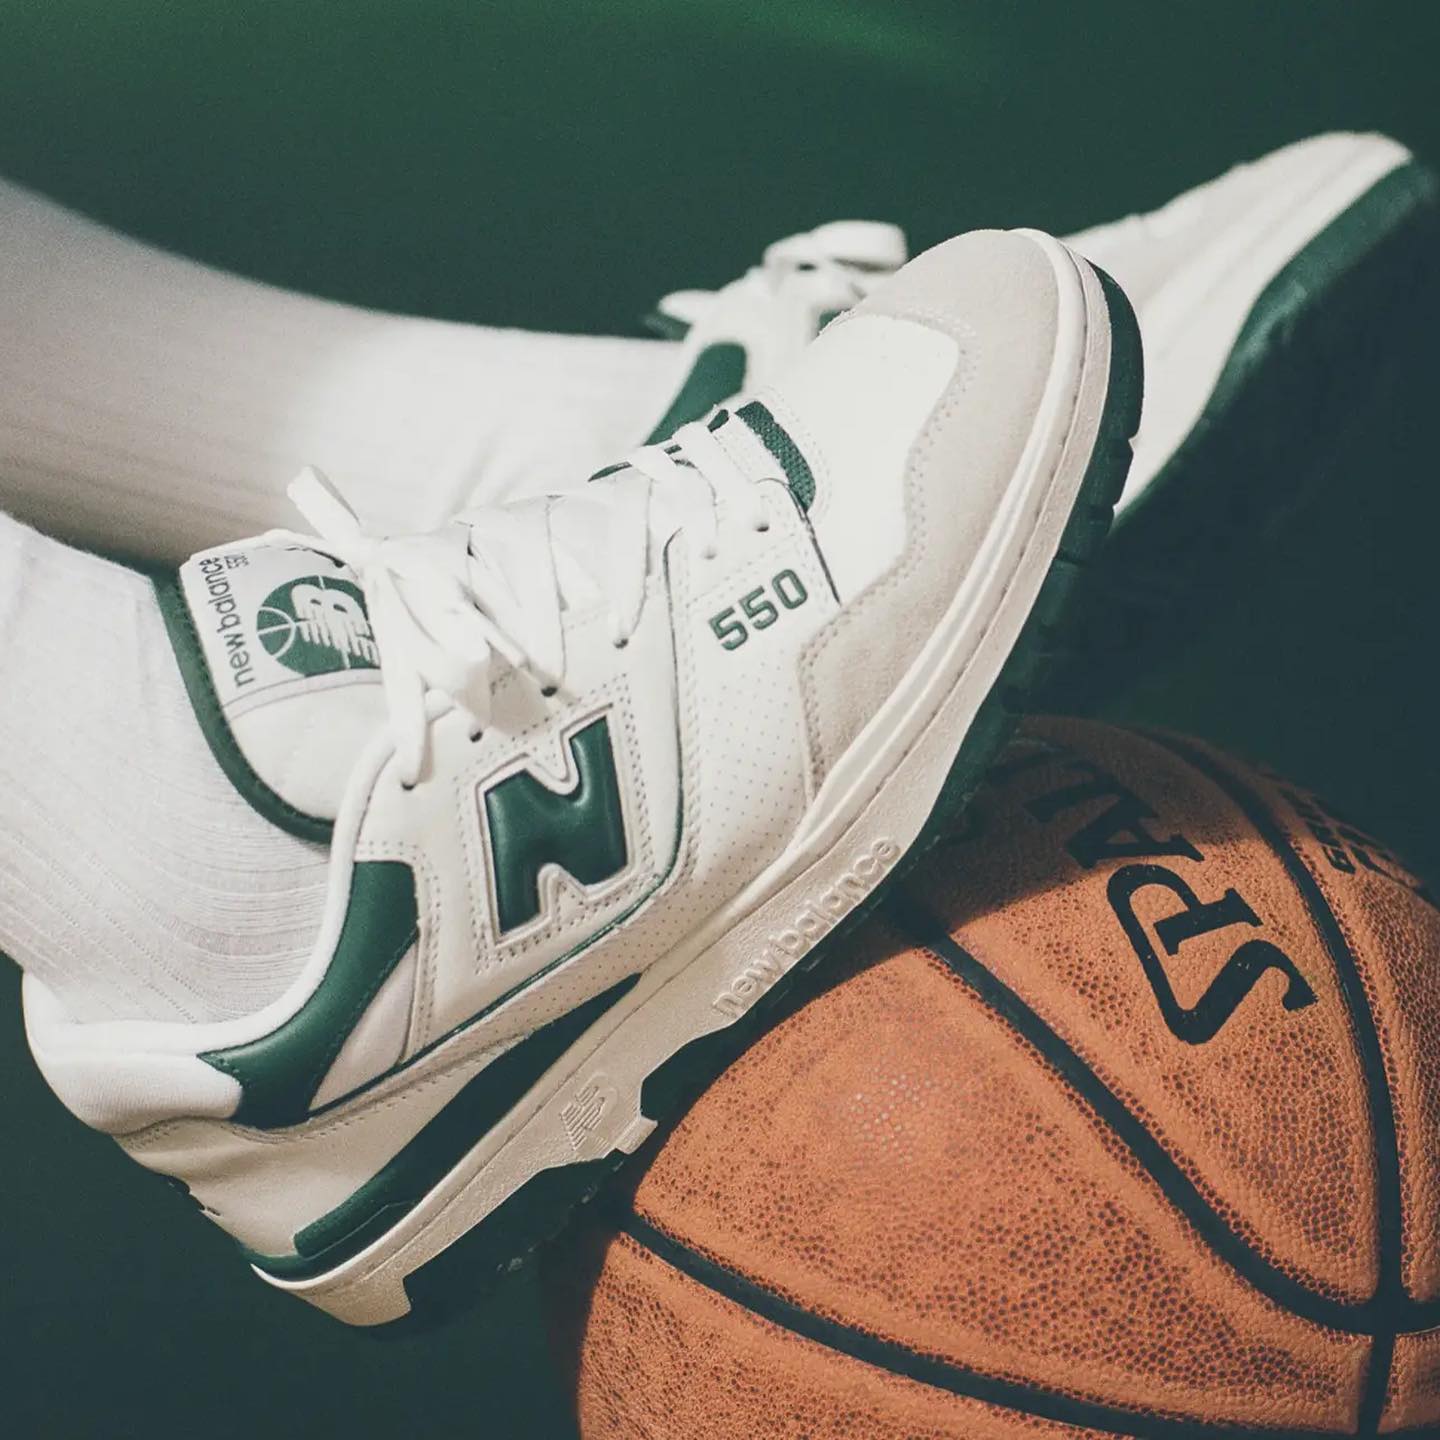 New Balance Shoes for Basketball | Shiny Lemons